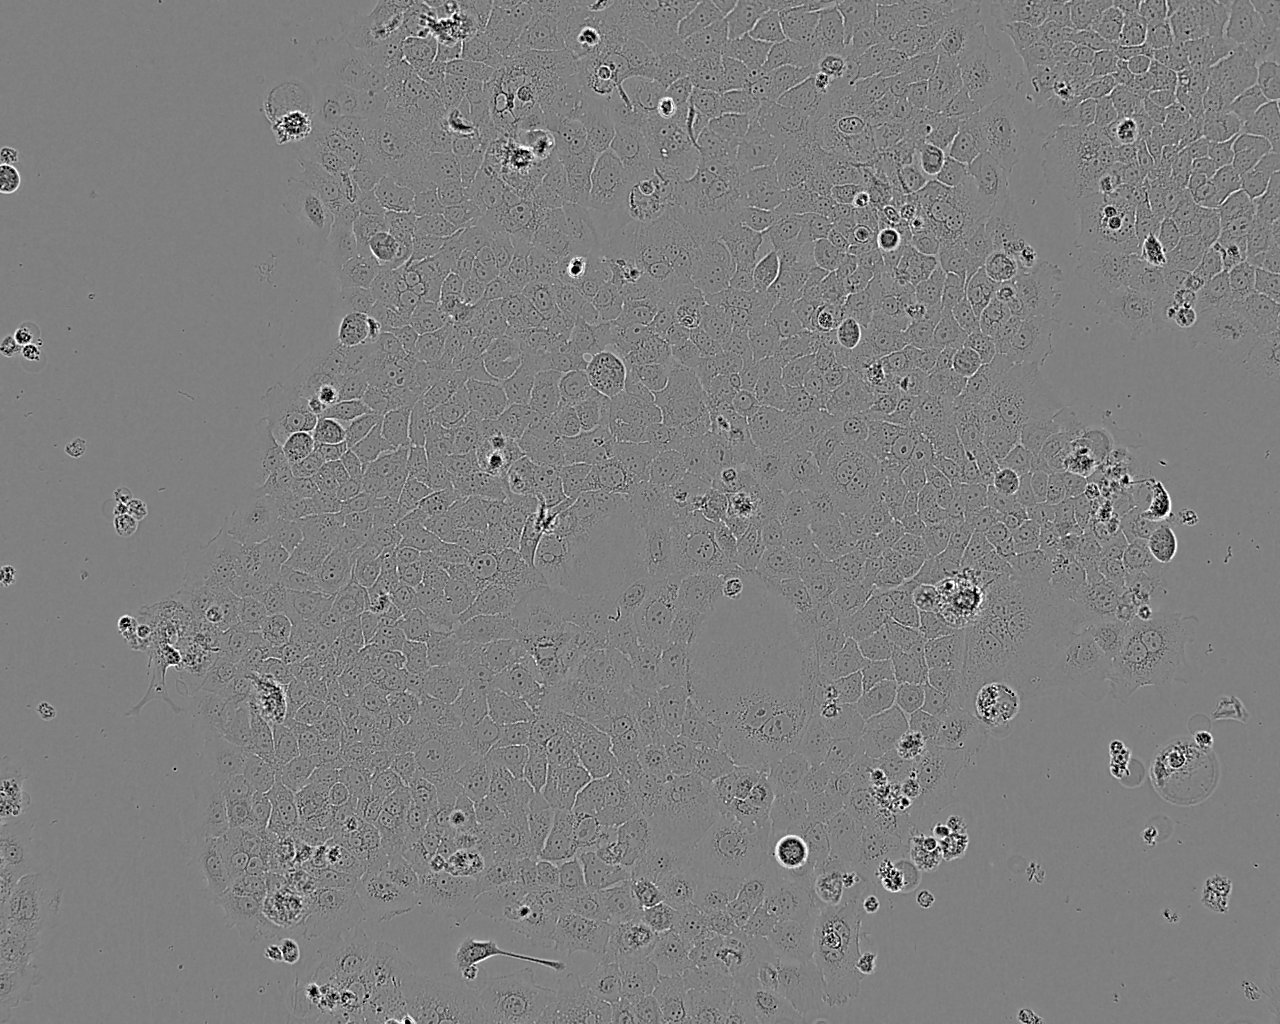 NCI-H2009 Cell:人肺腺癌细胞系